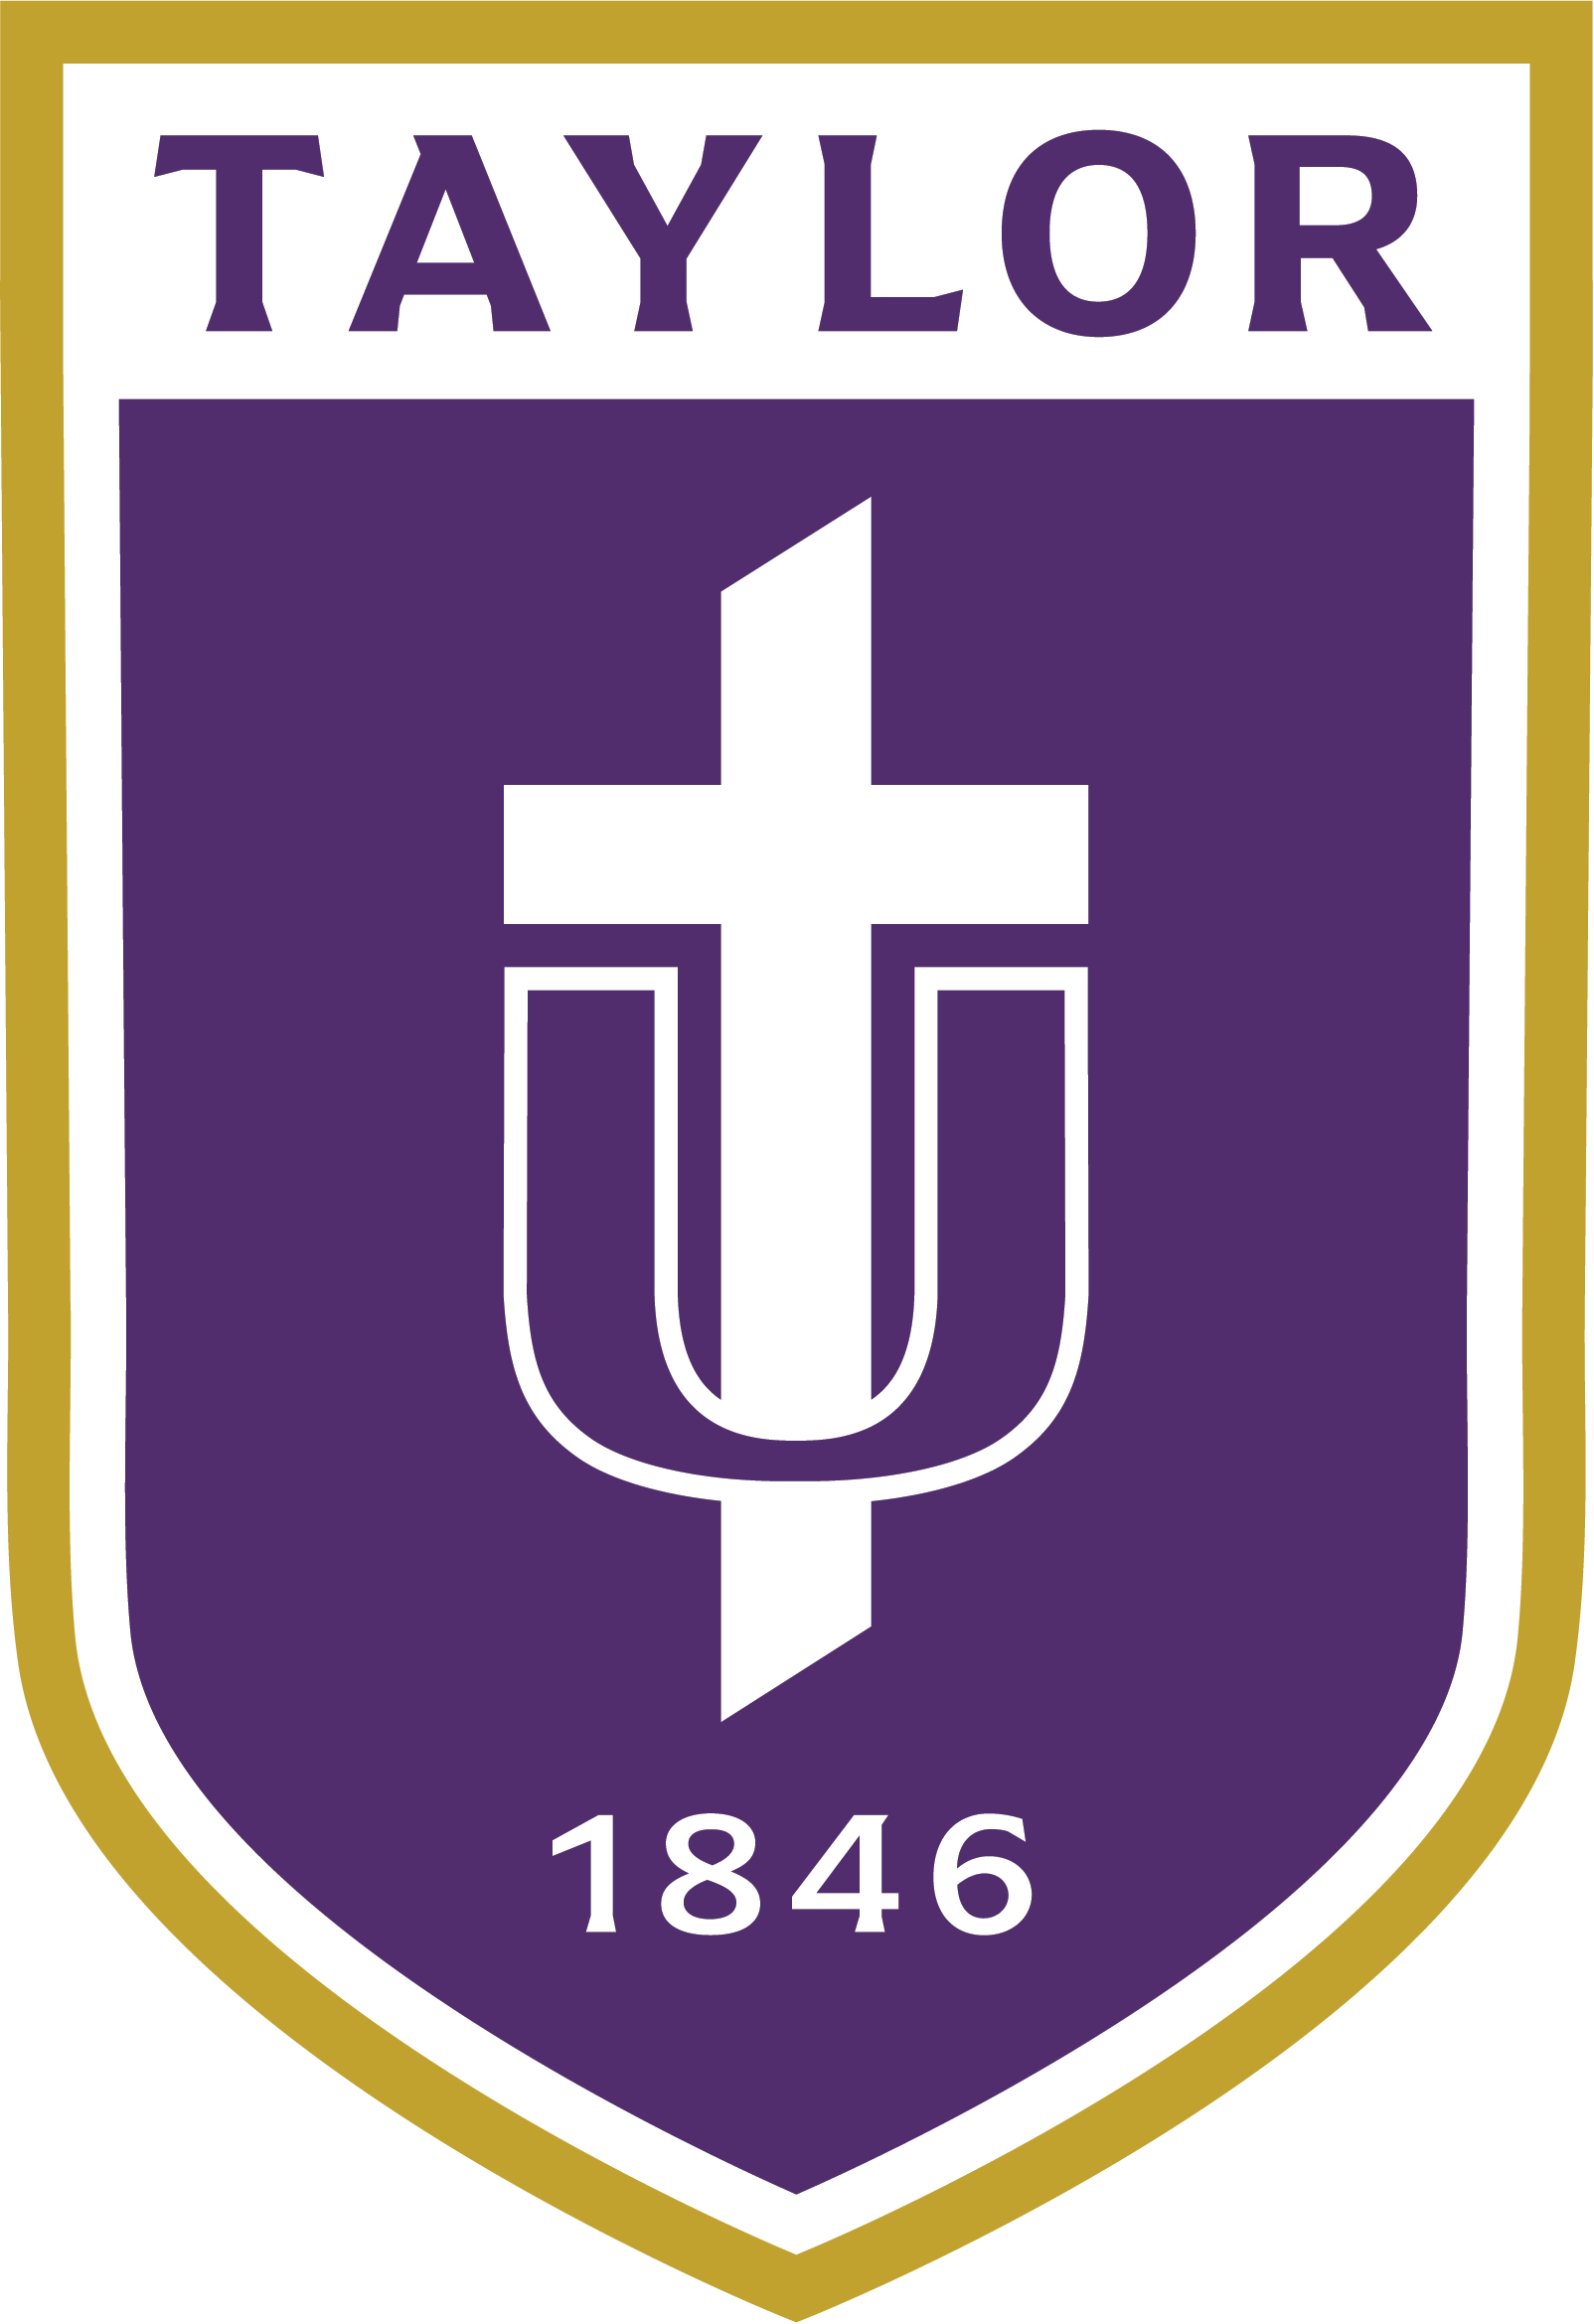 Taylor University Shield with Wordmark